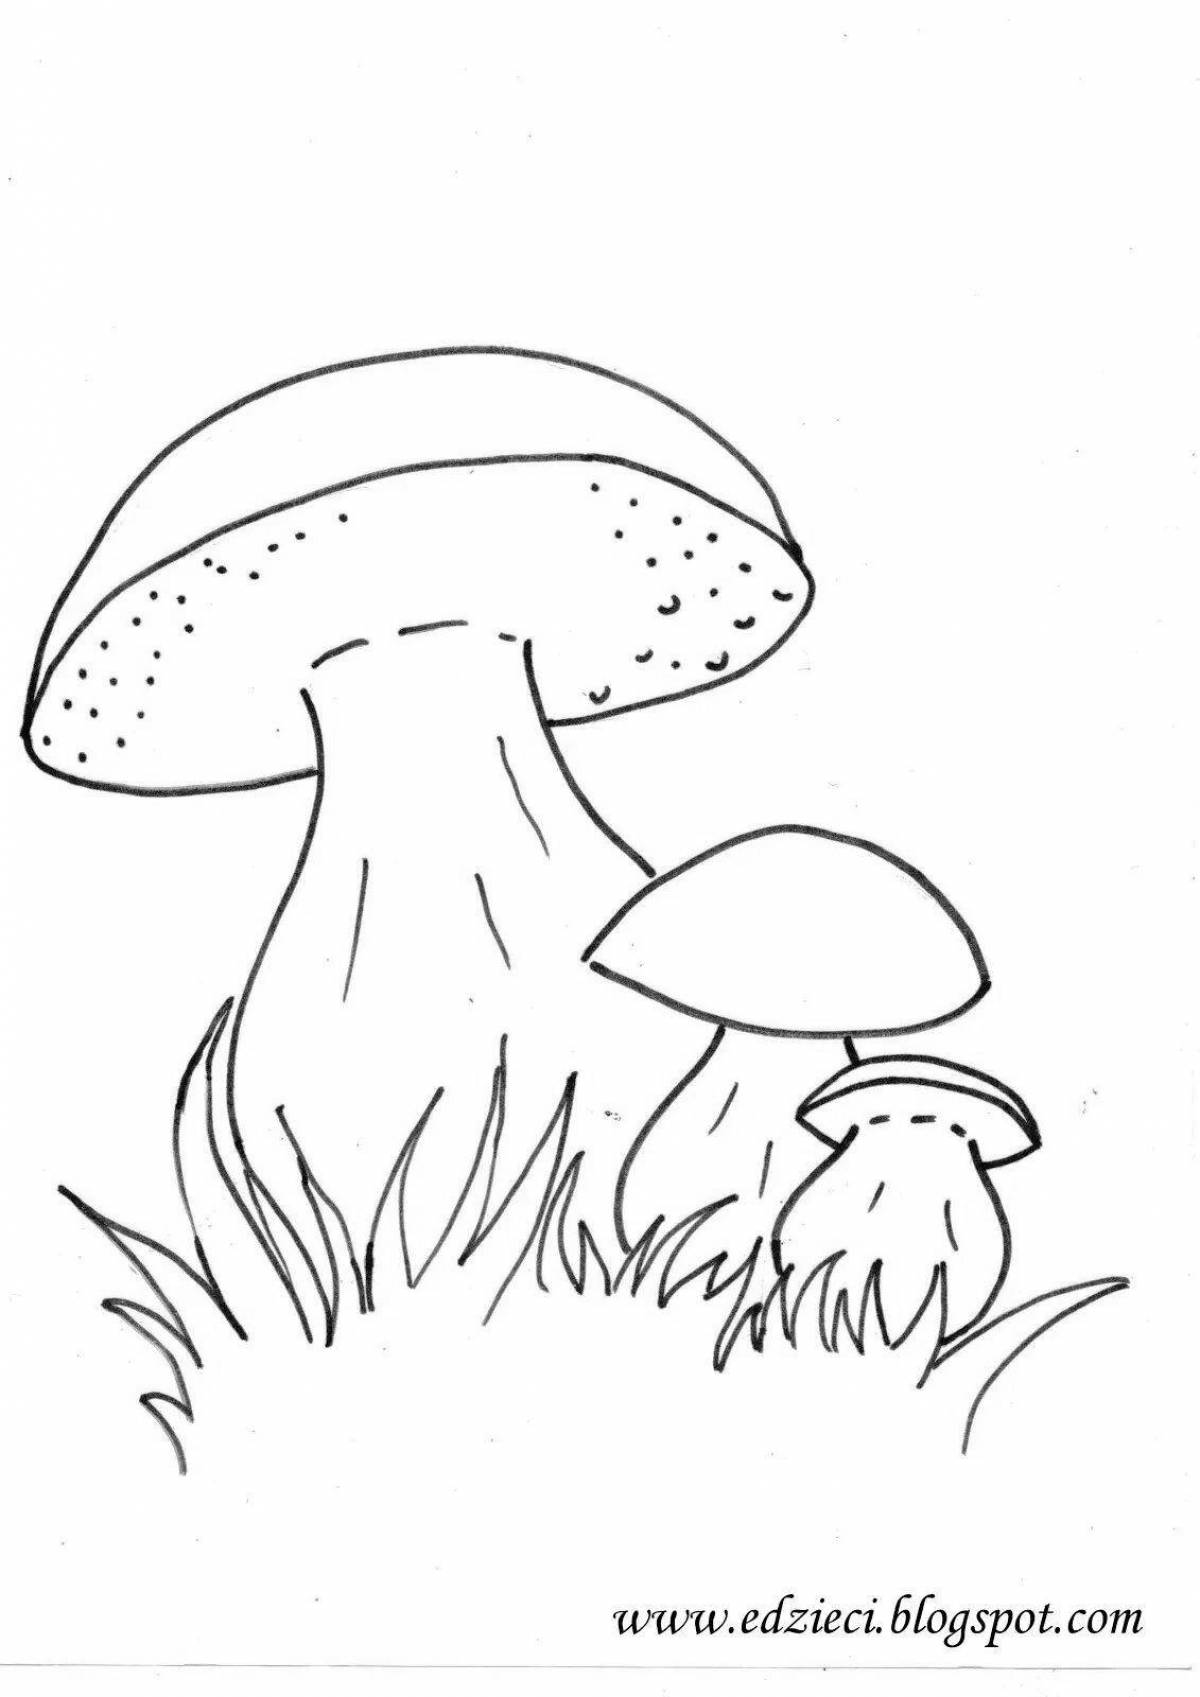 Coloring page charming mushroom boletus